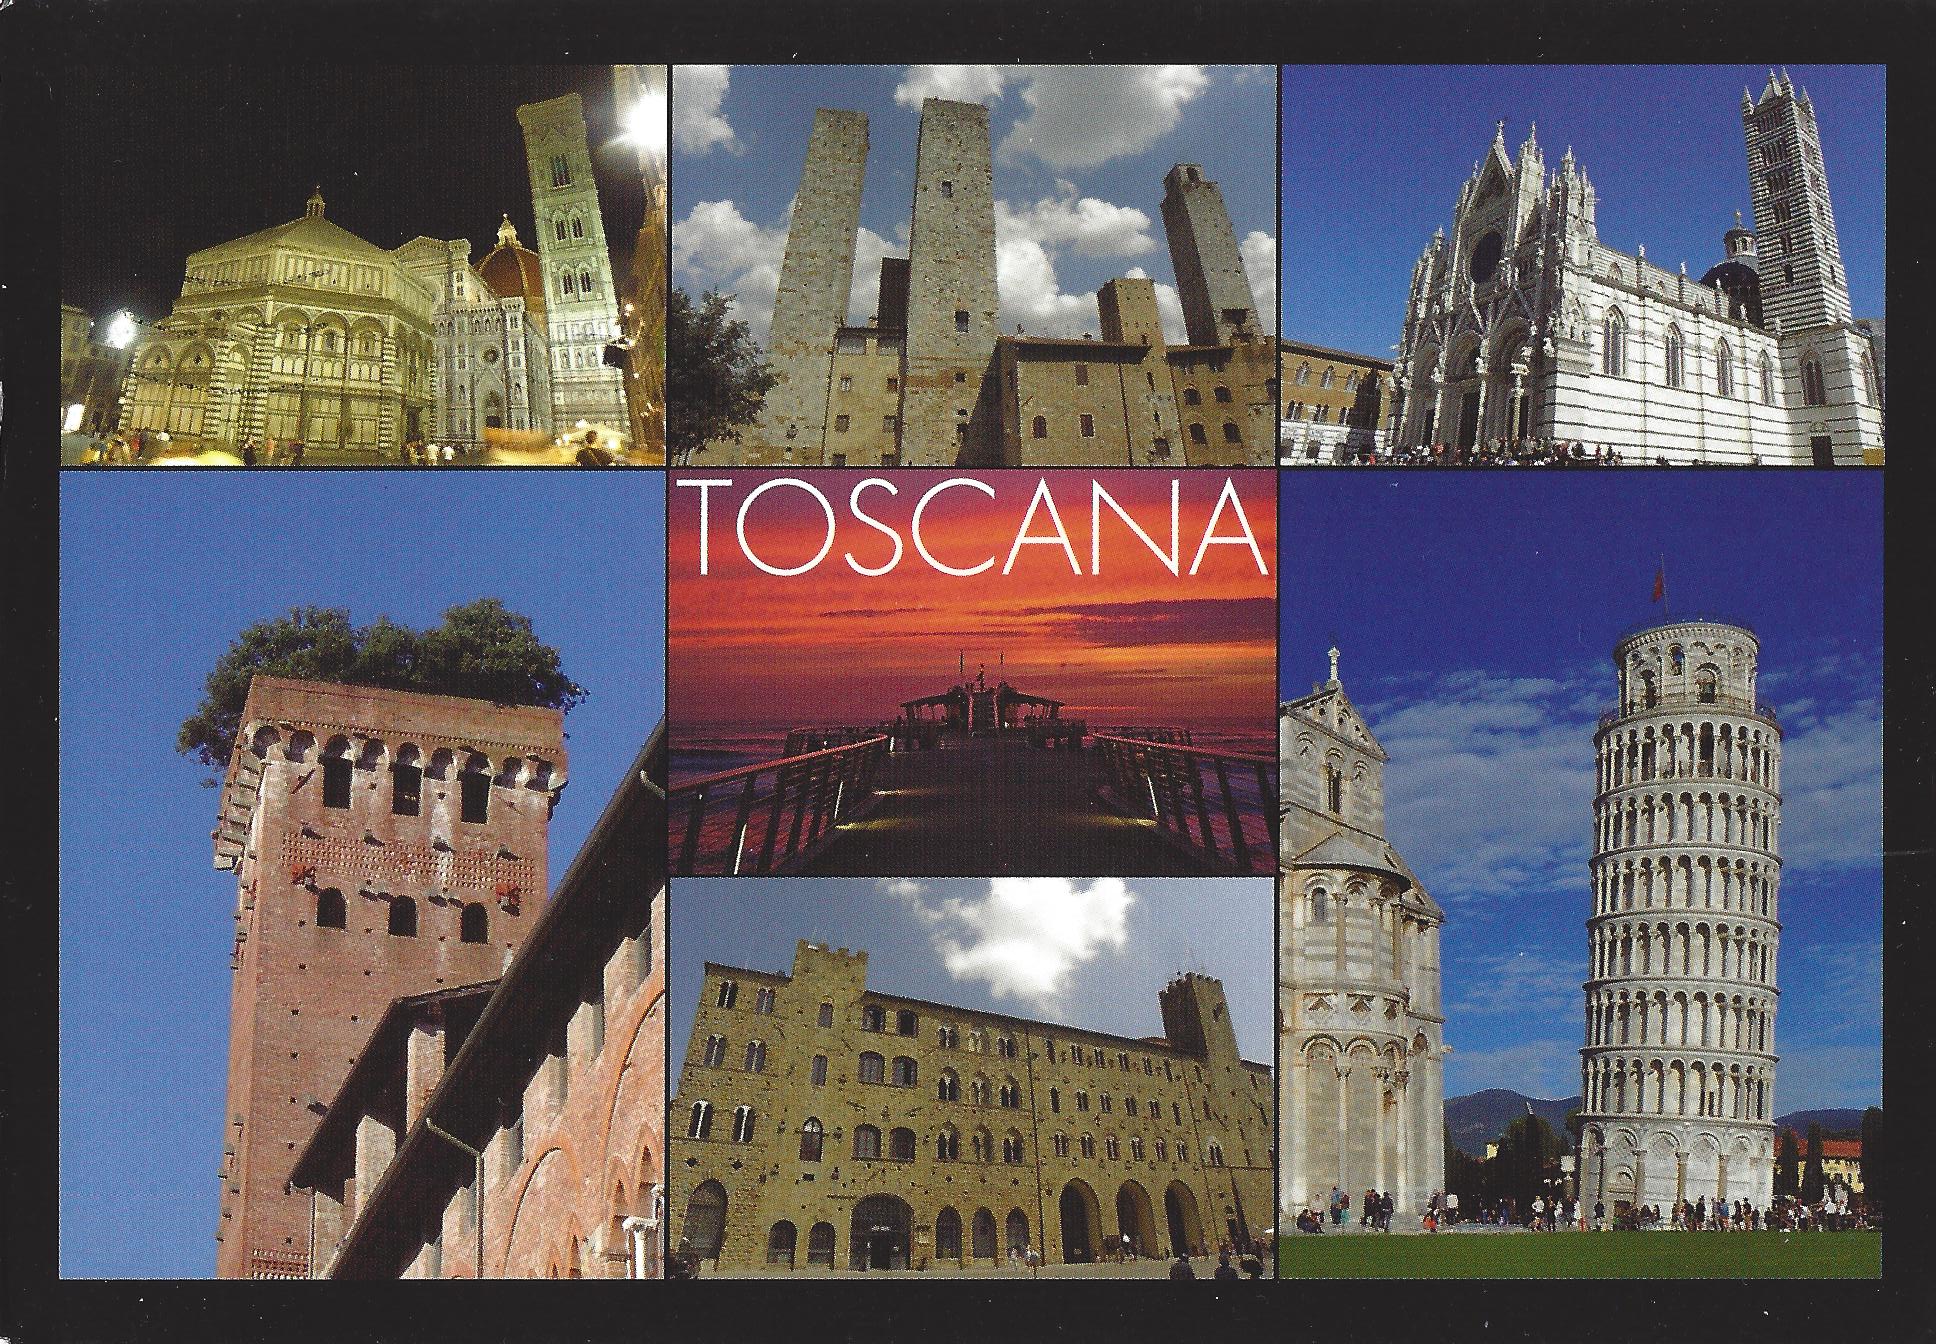 Toscana v 01